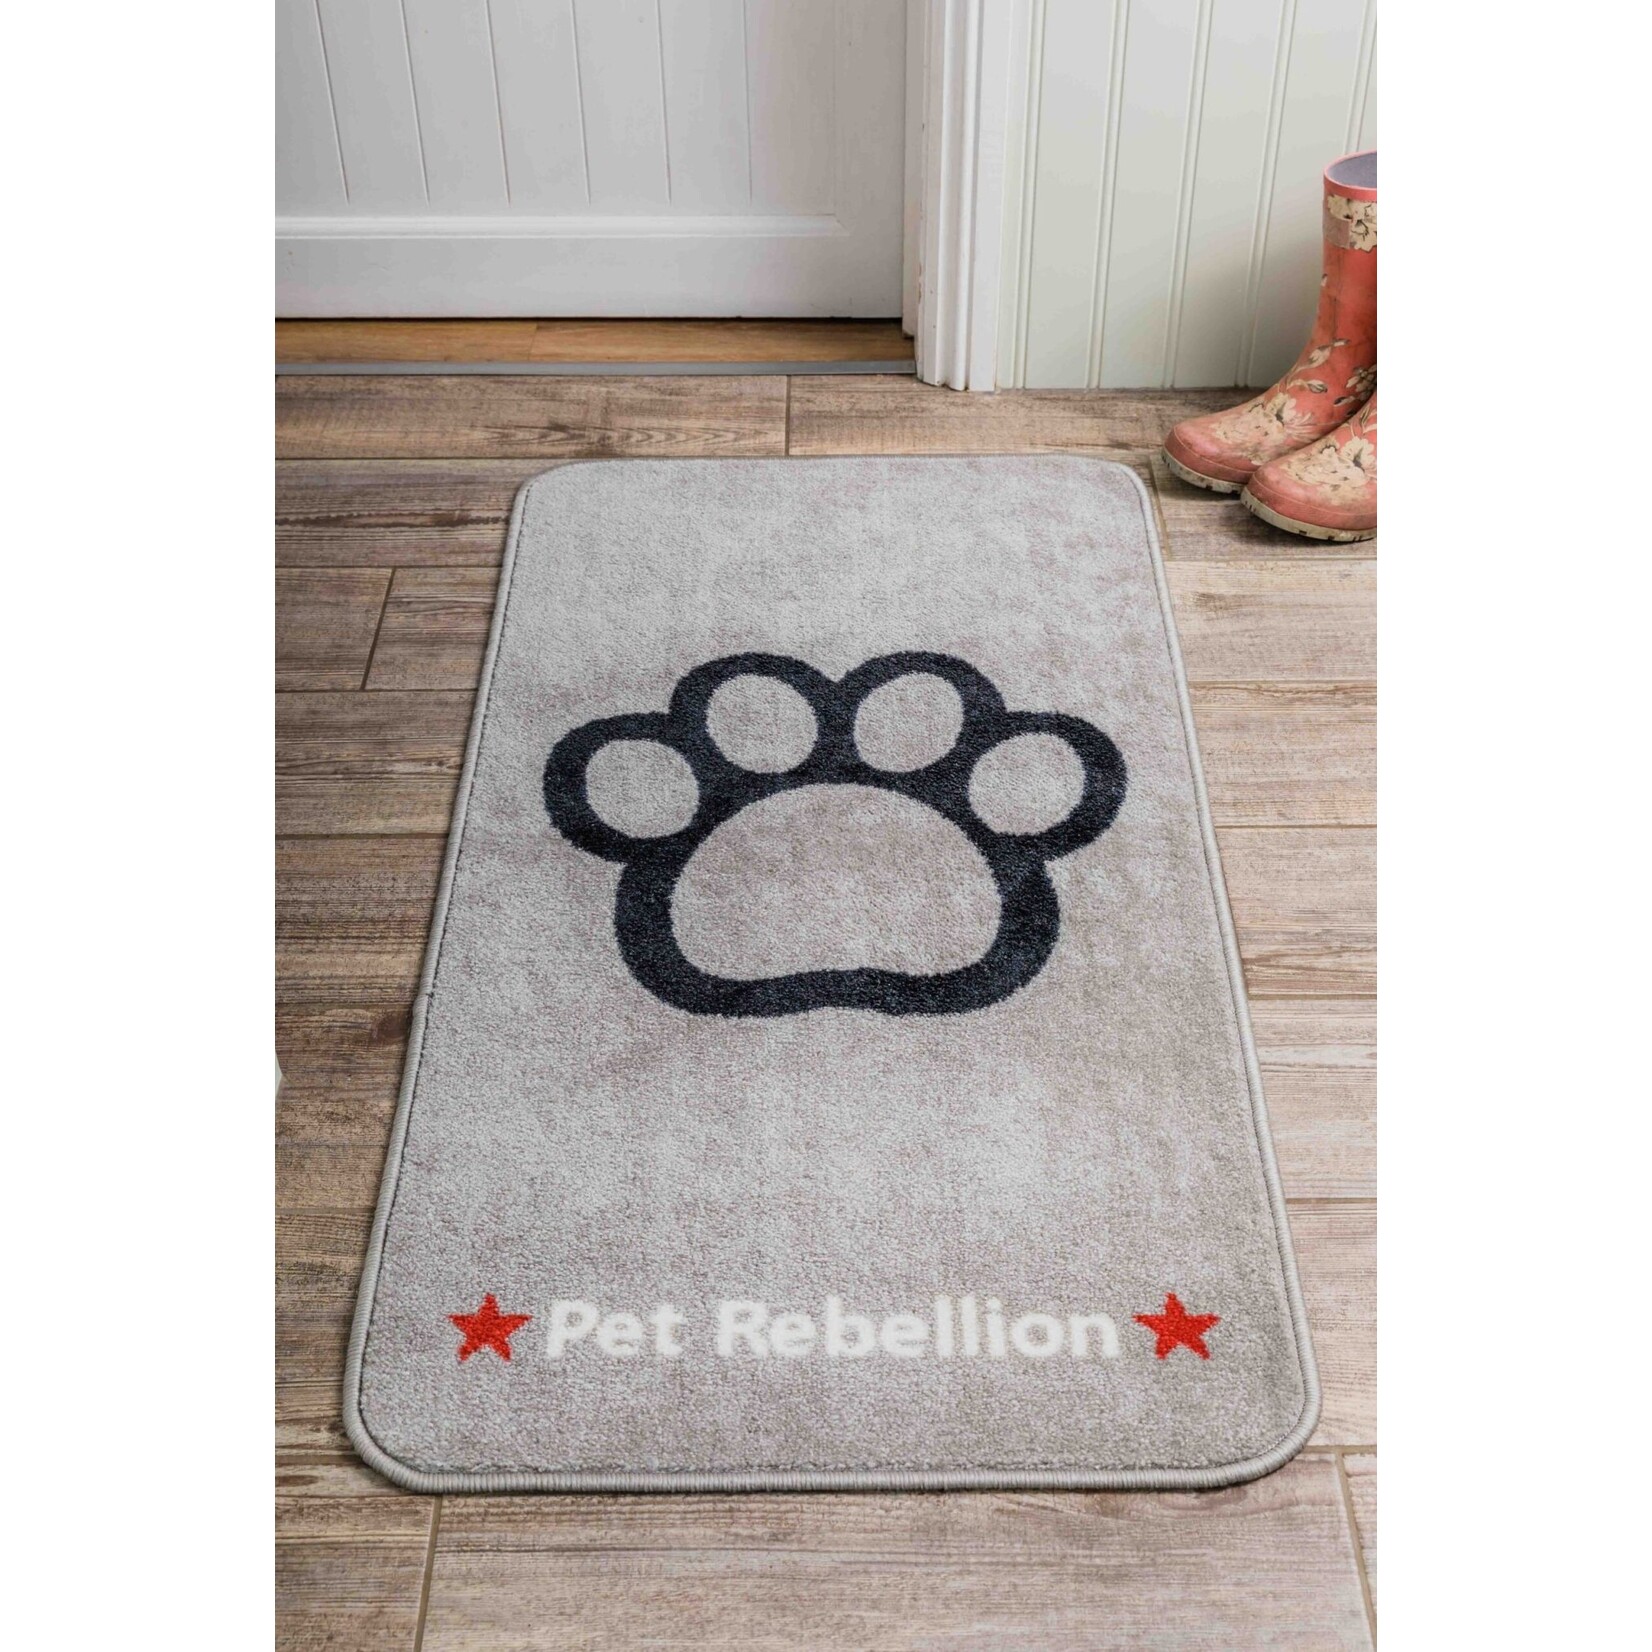 Pet Rebellion Stop Muddy Paws Stars Dog Mat only £11.24